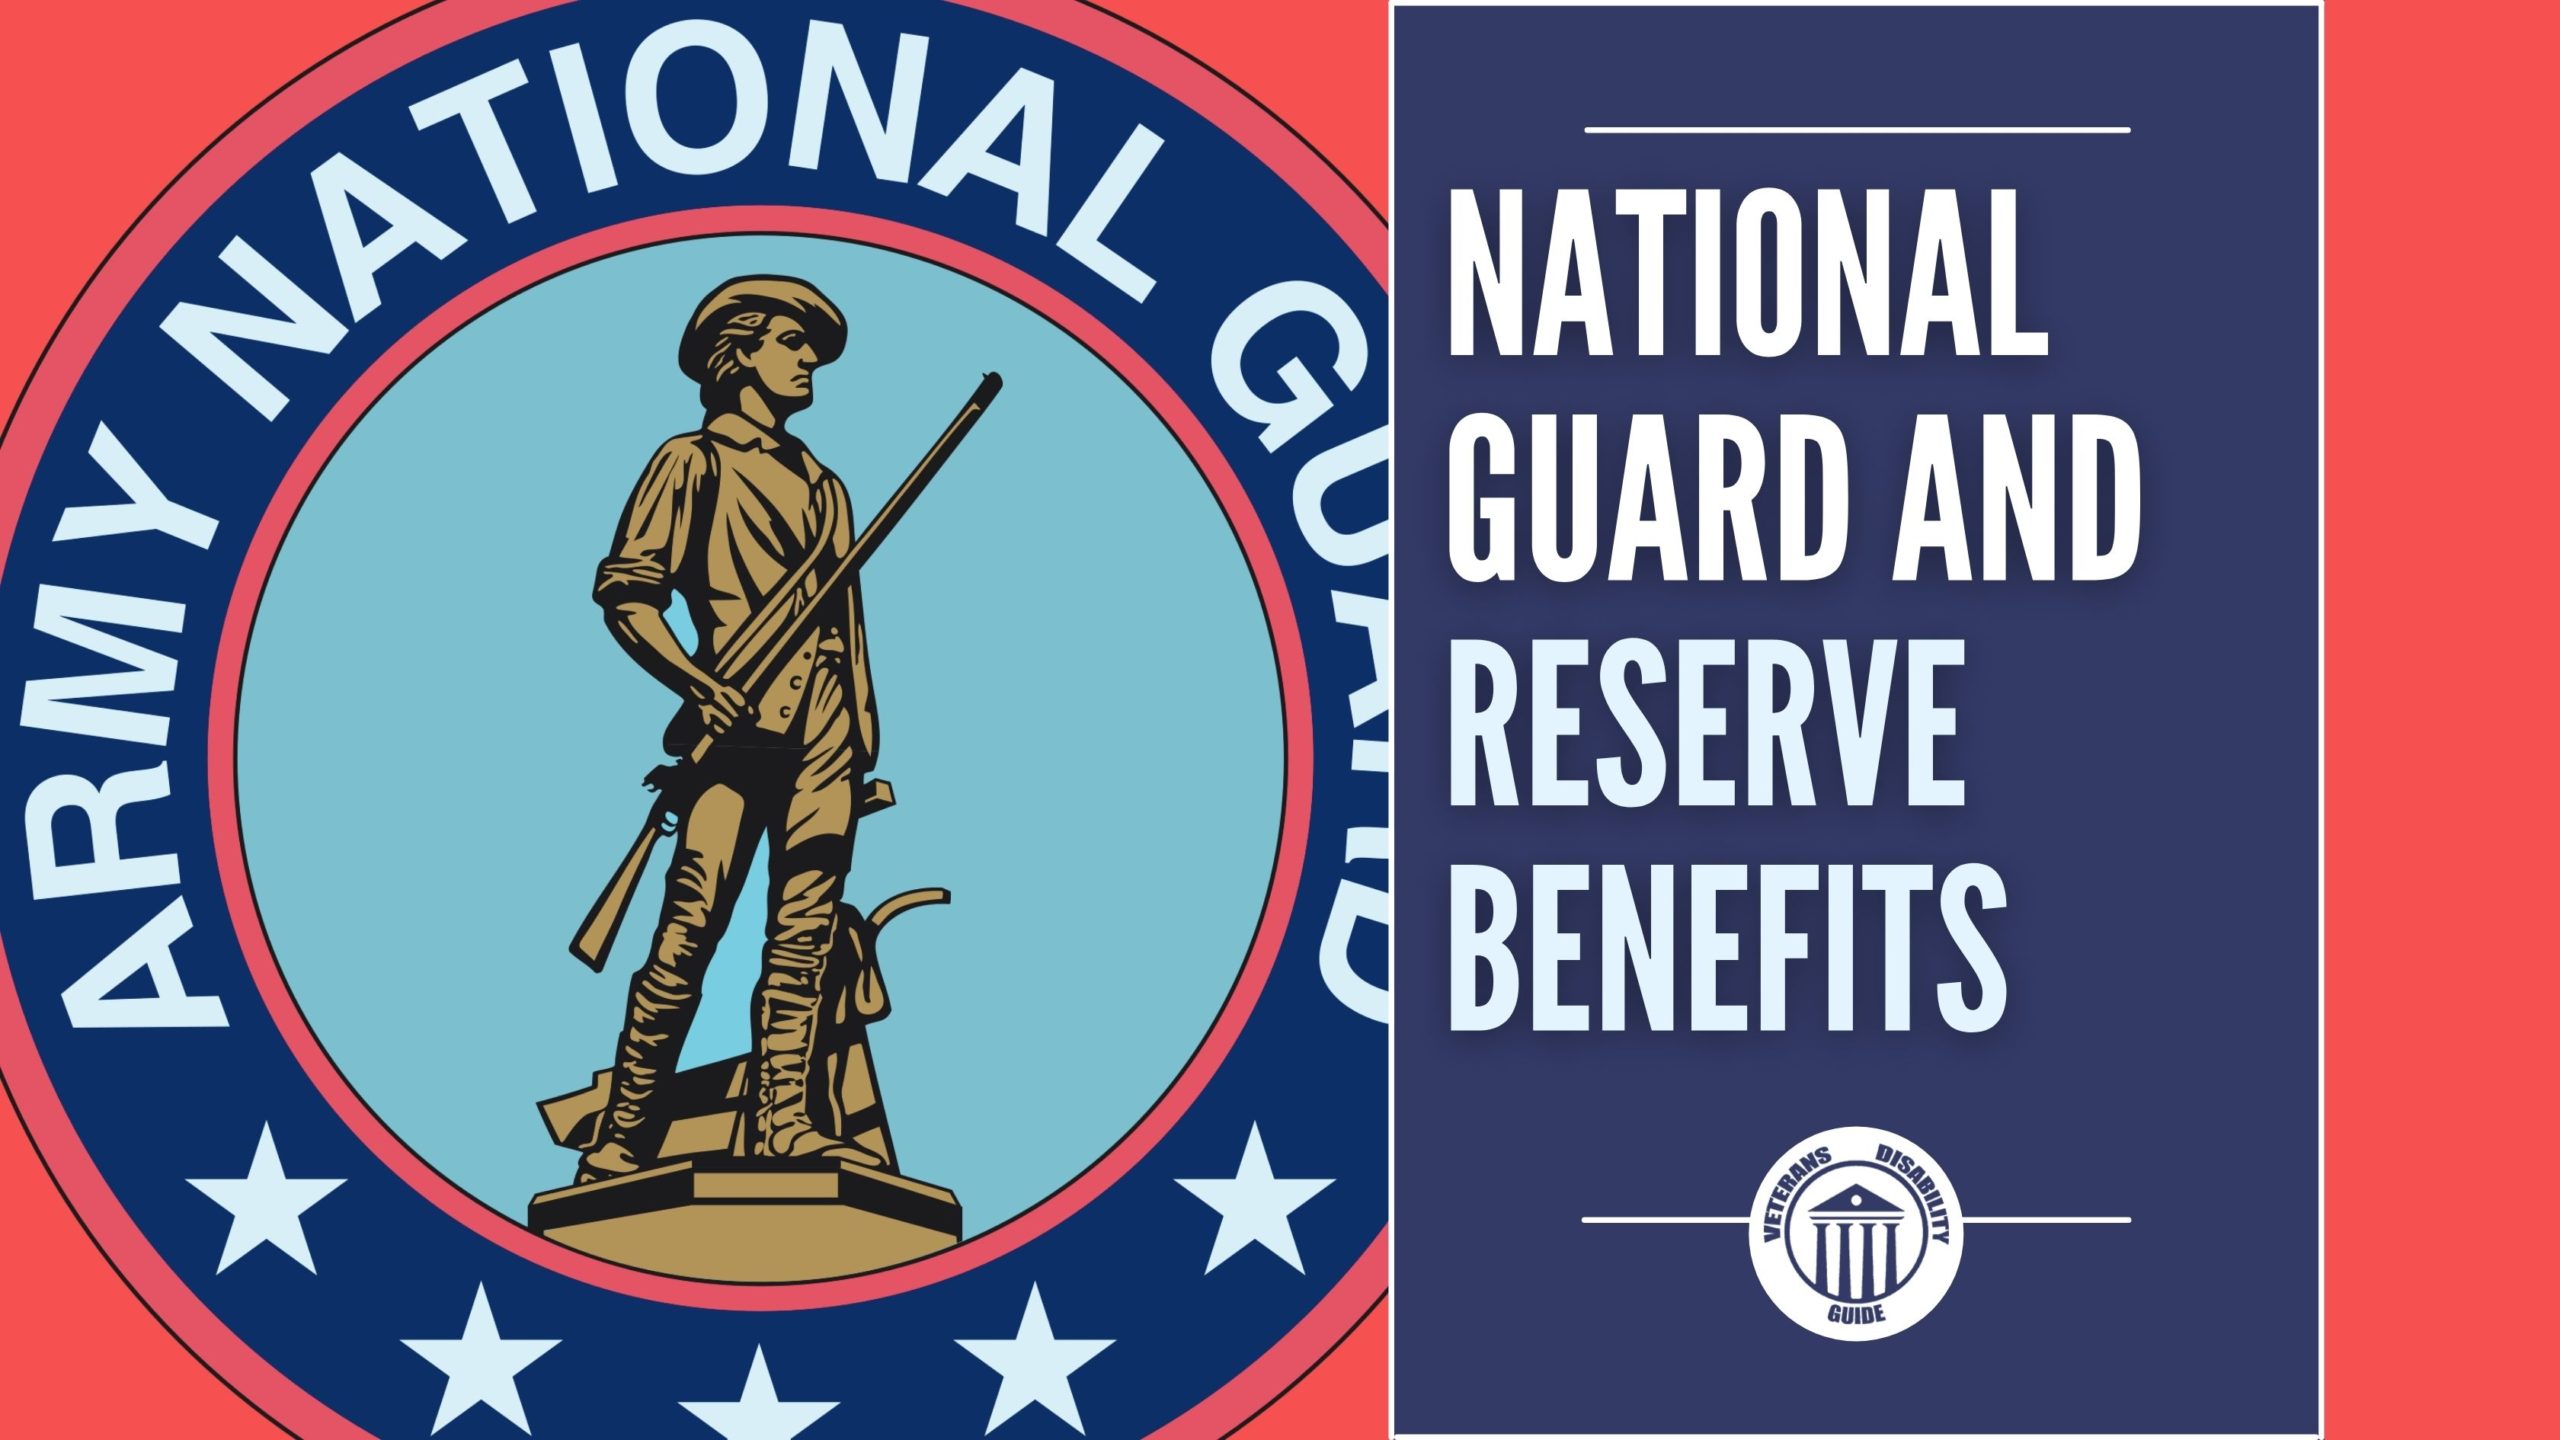 National Guard And Reserve Benefits blog header image